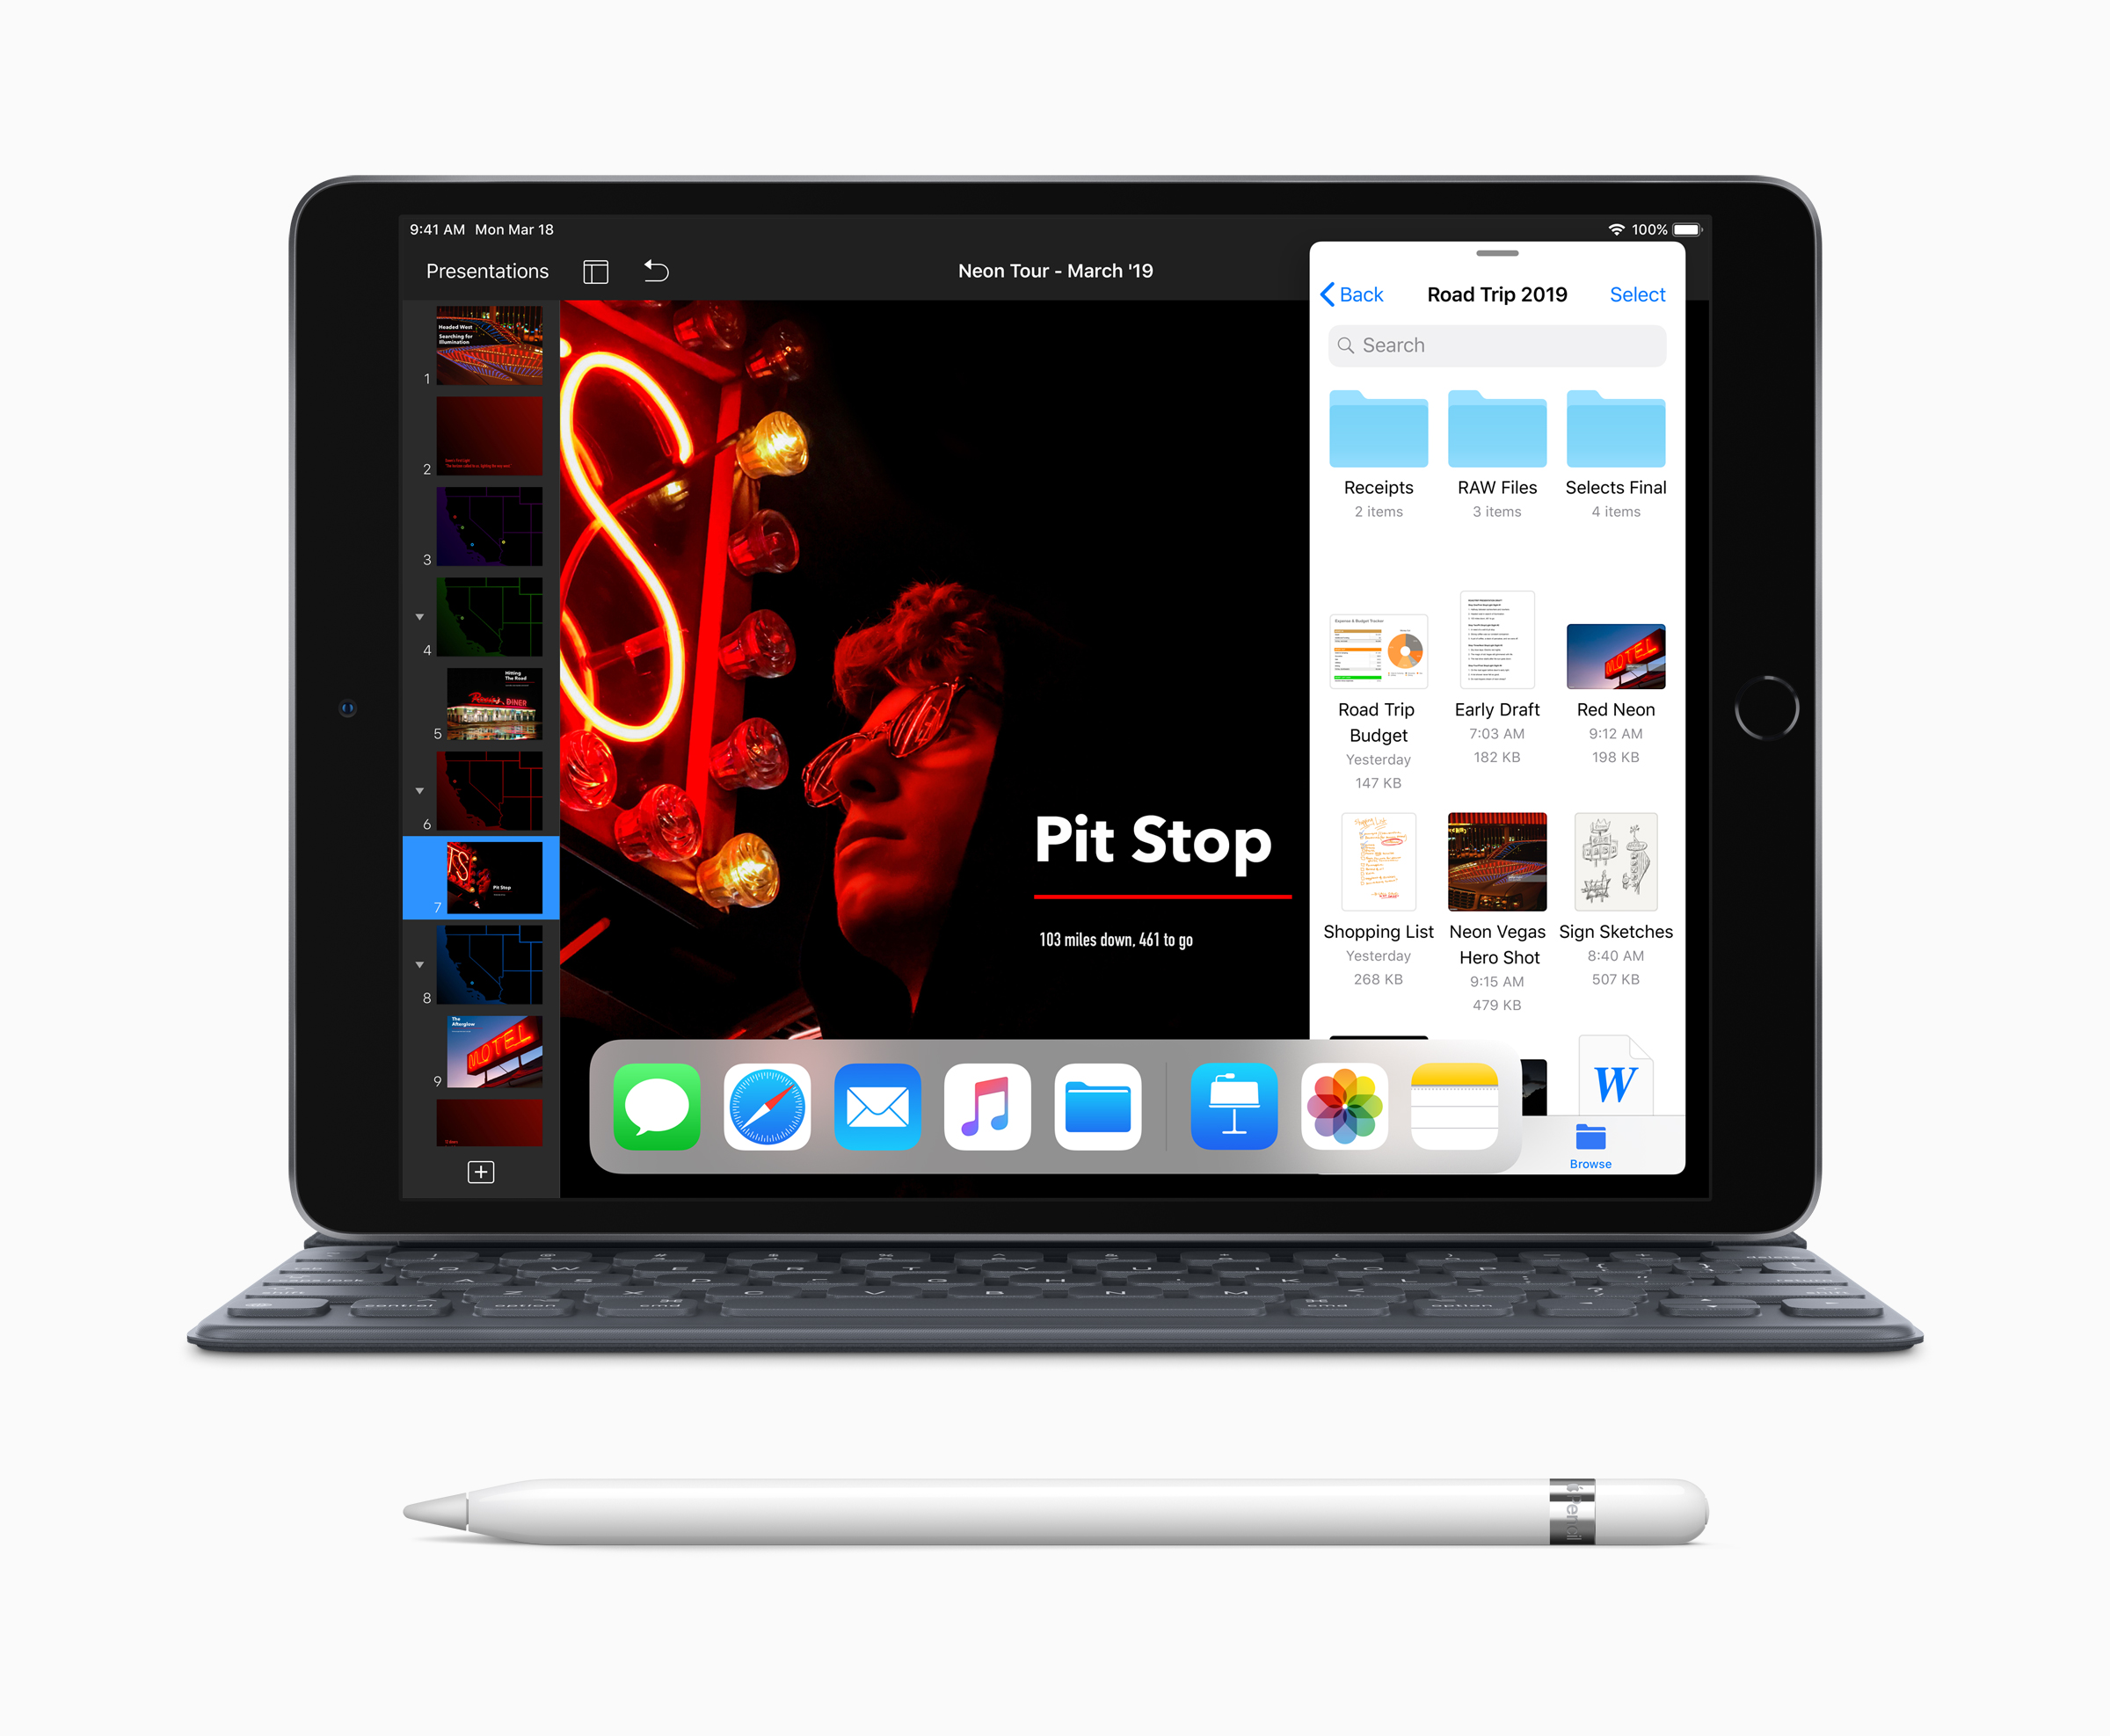 New-iPad-Air-with-Smart-Keyboard-Apple-Pencil-03192019.jpg